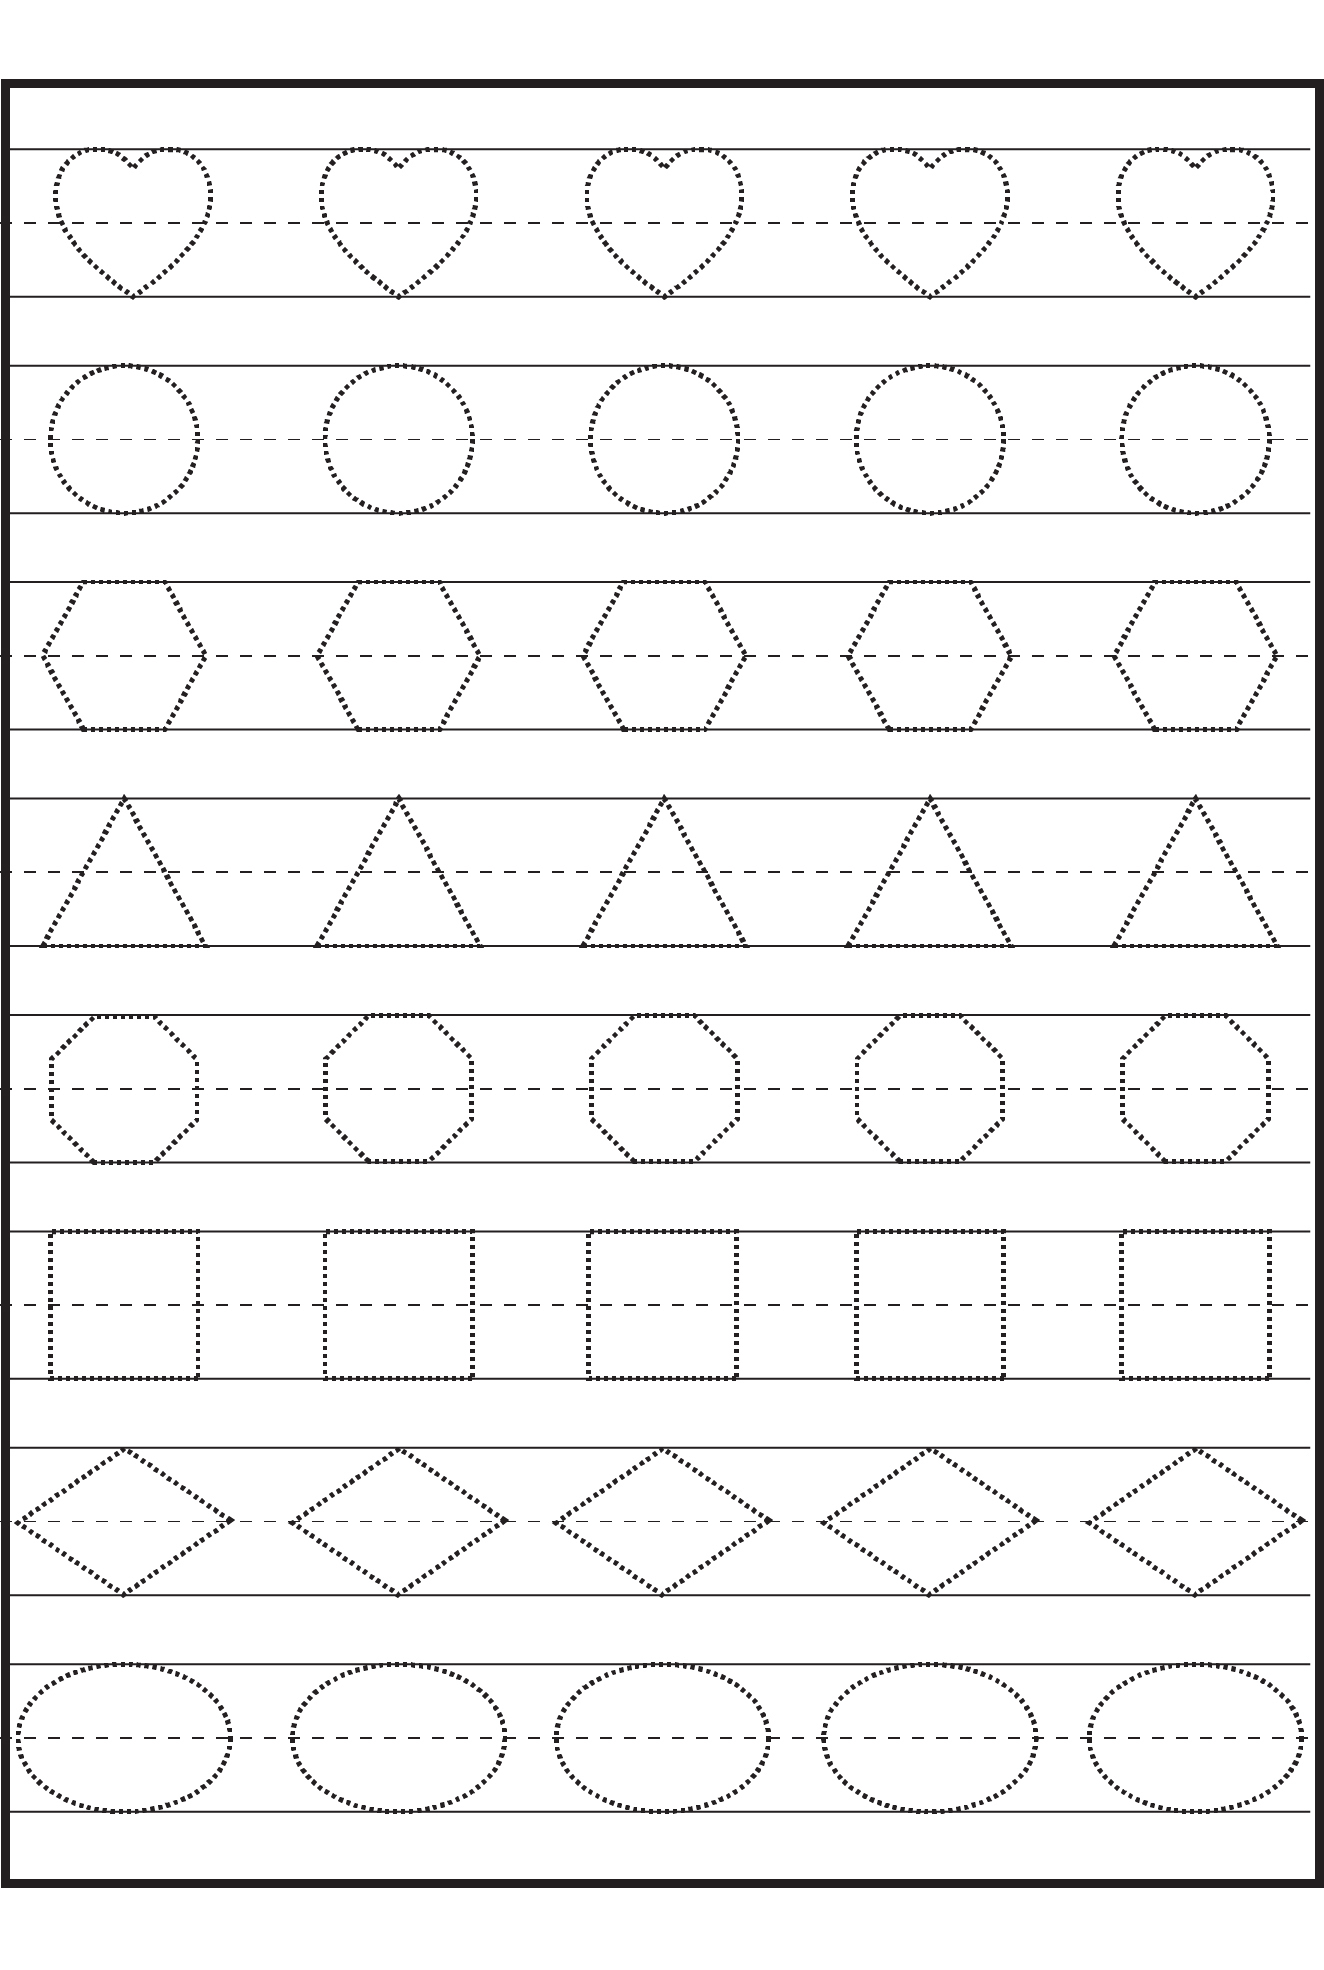 tracing-patterns-worksheets-alphabetworksheetsfree